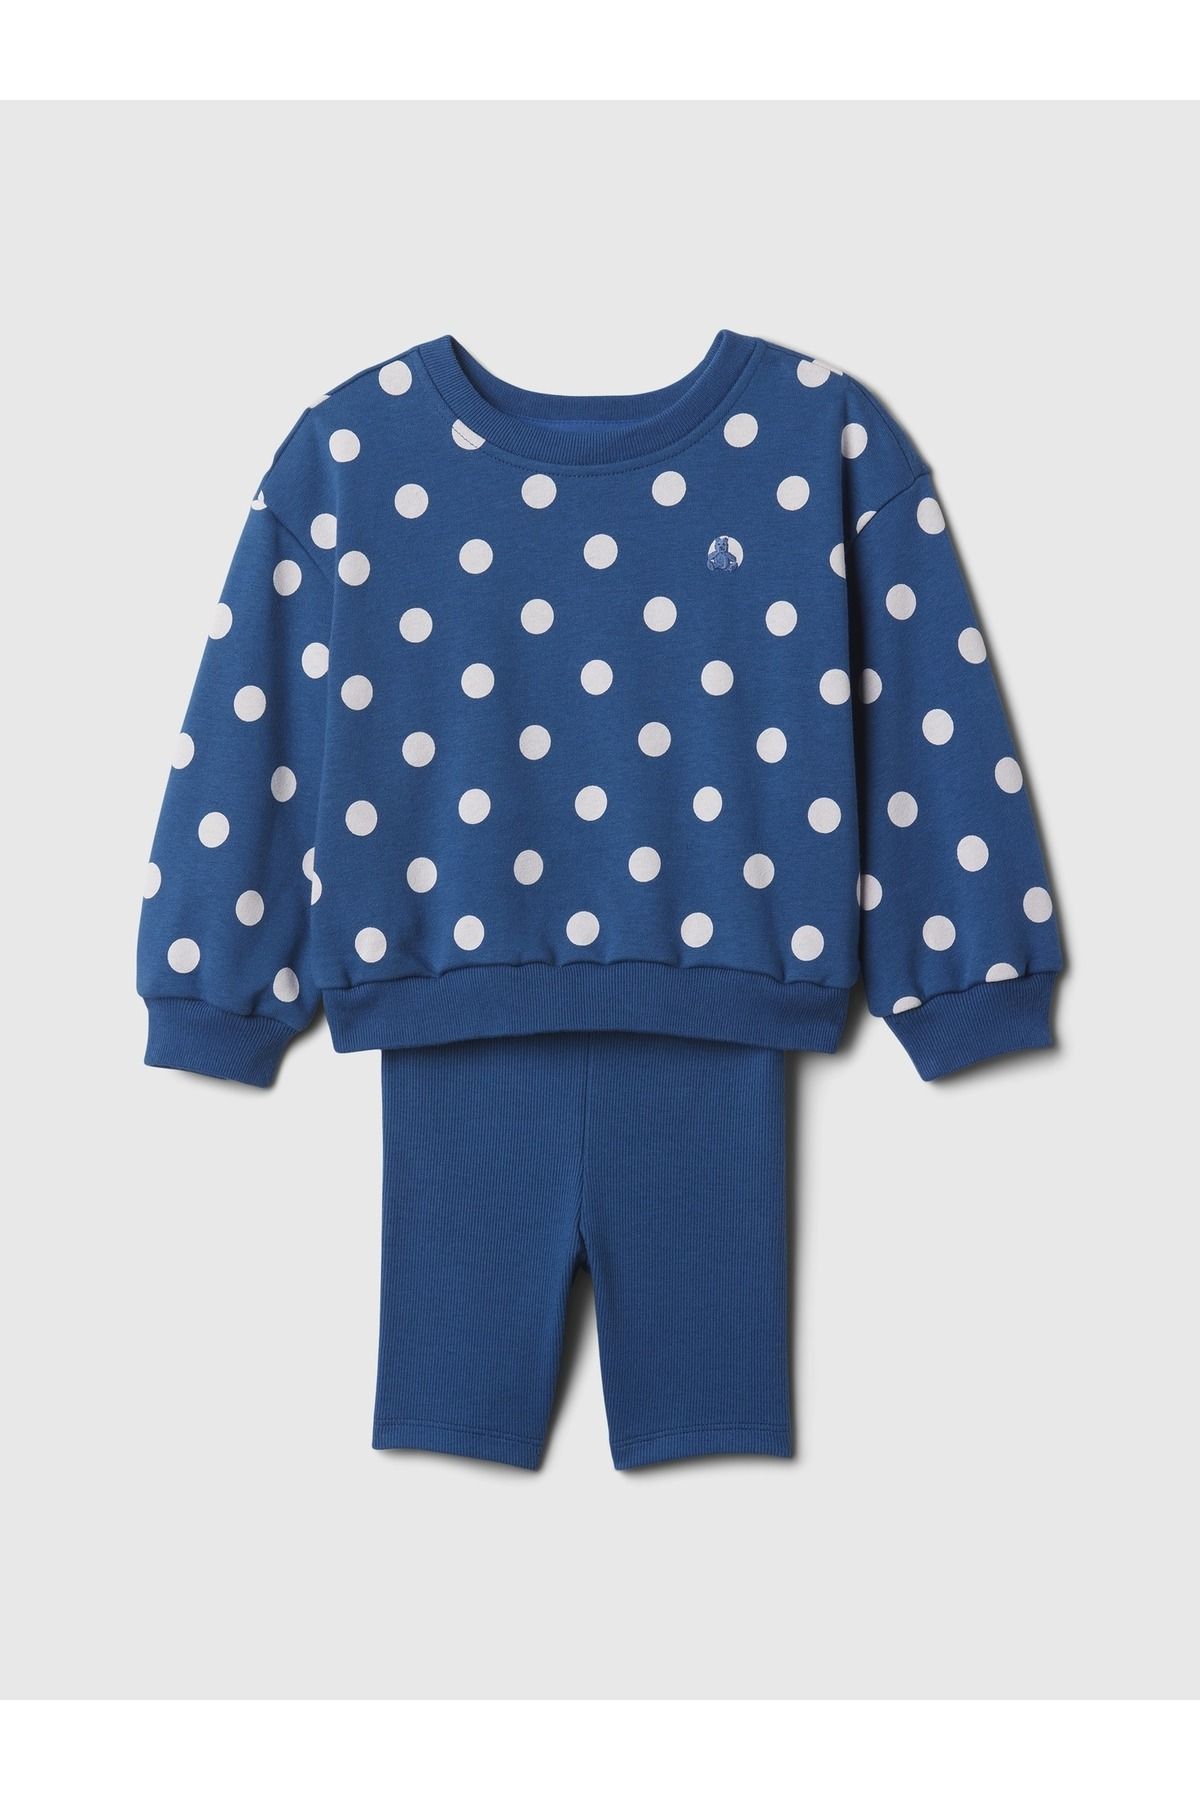 GAP Kız Bebek Koyu Mavi Desenli Outfit Set